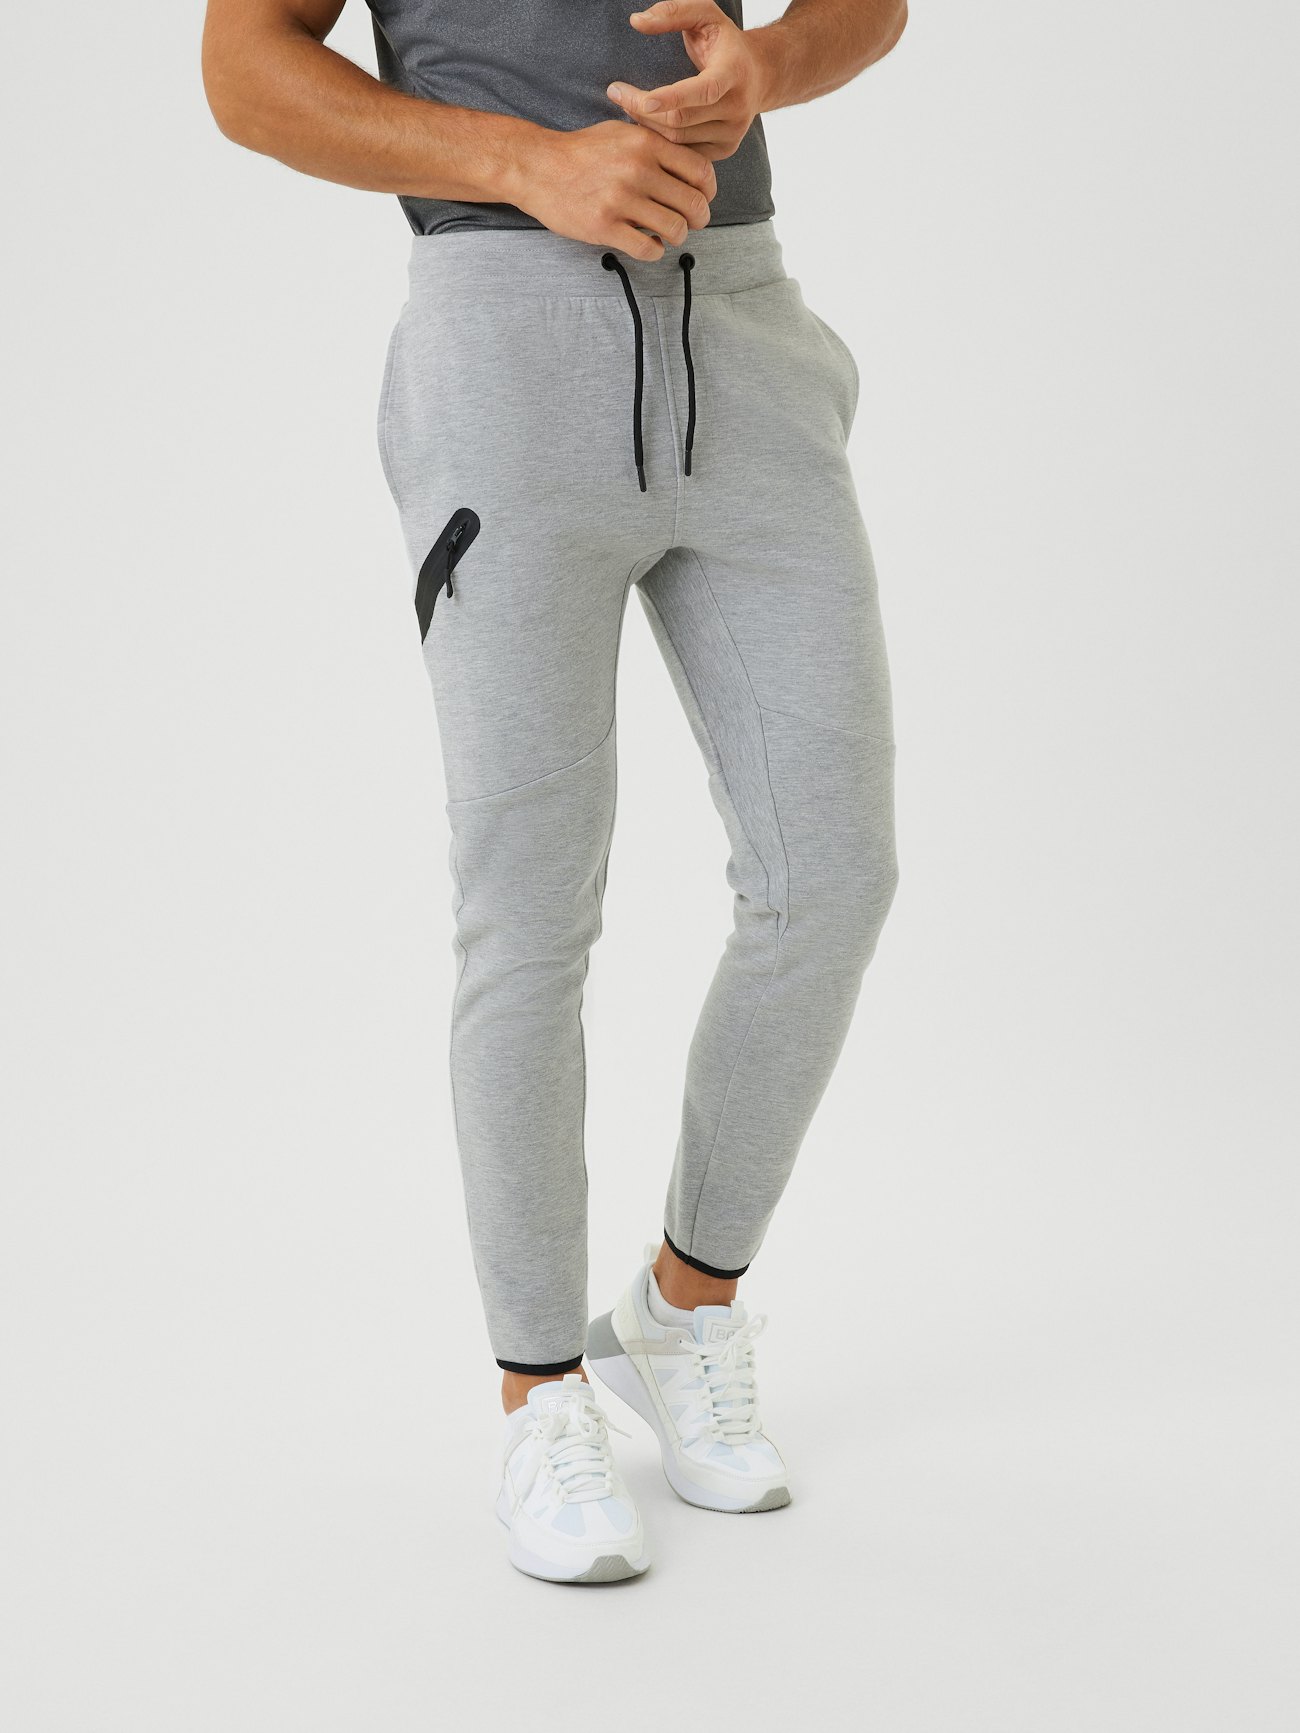 Nike Tech Fleece Joggers Pants Cuffed Washed Black All Original